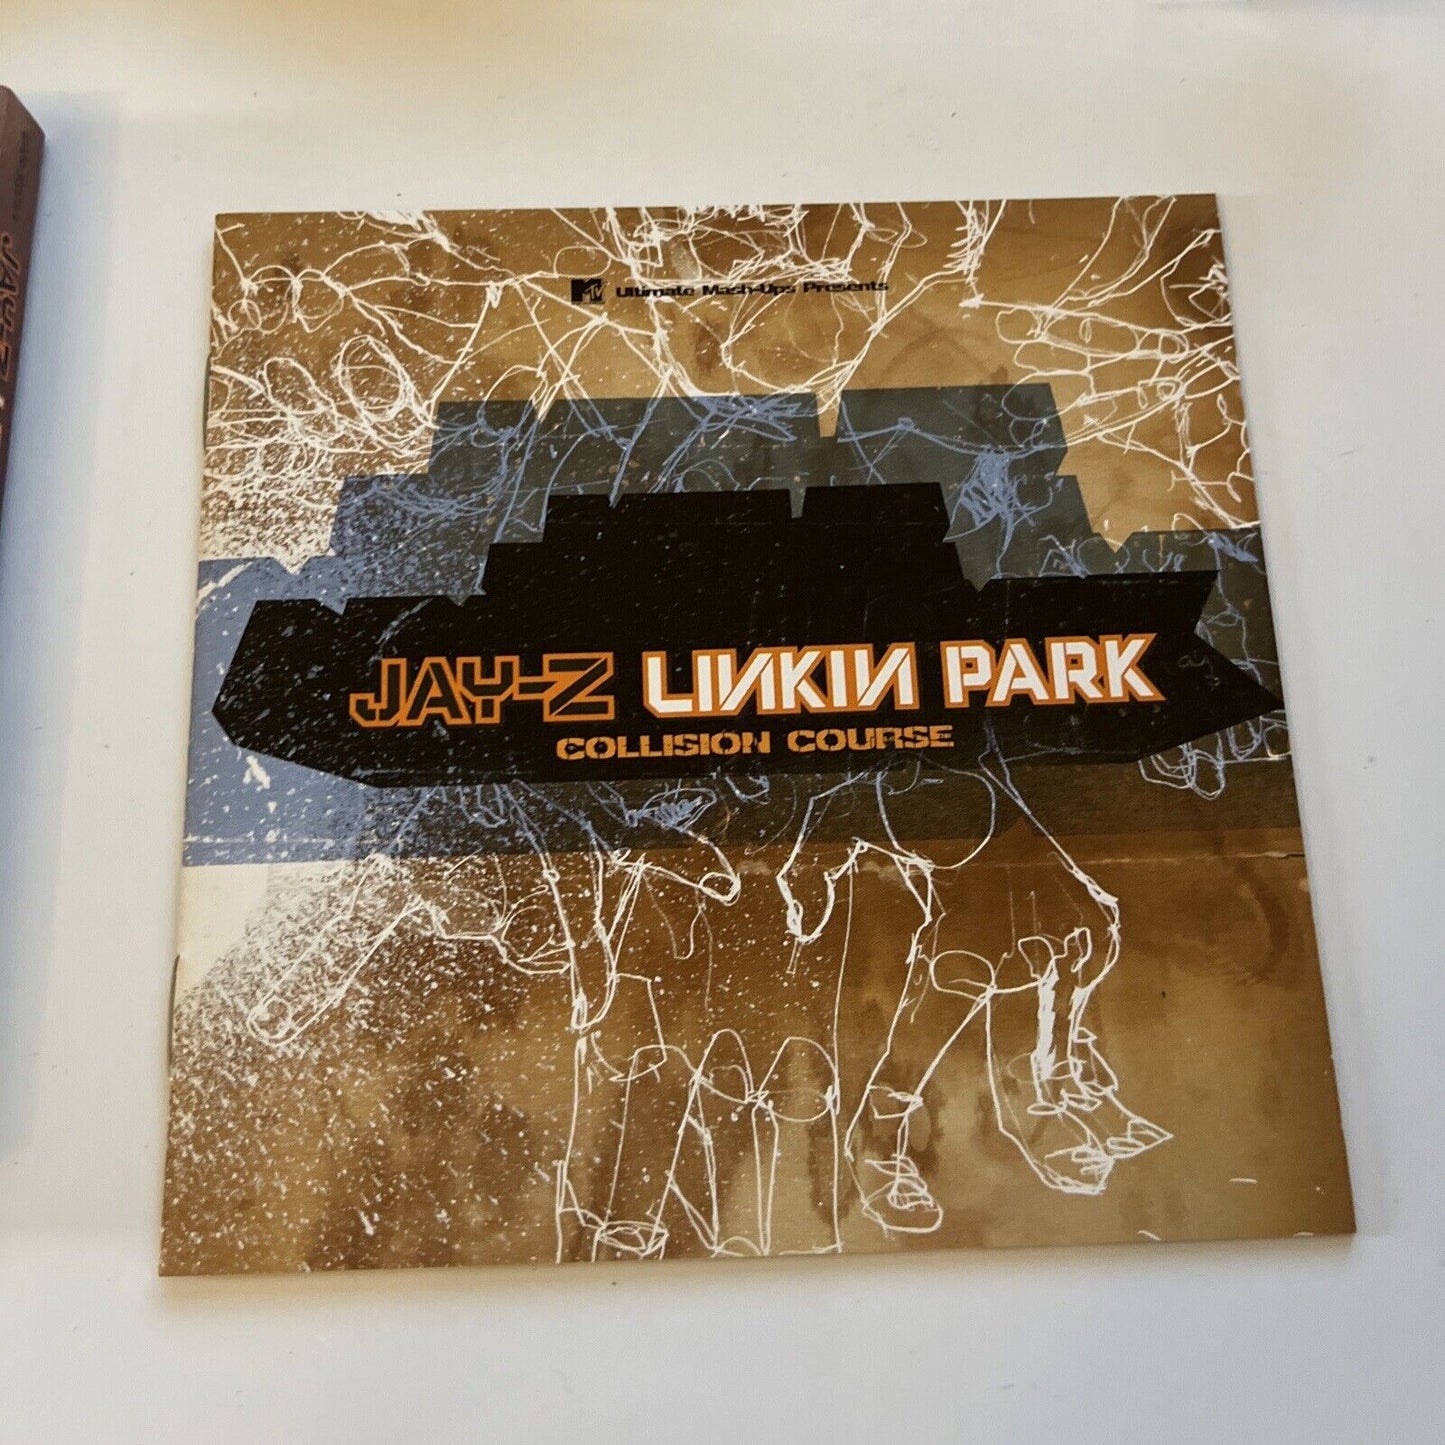 Jay-Z Linkin Park Collision Course (CD + DVD) Obi Japan Wpzr30073-4 Region 4 &2